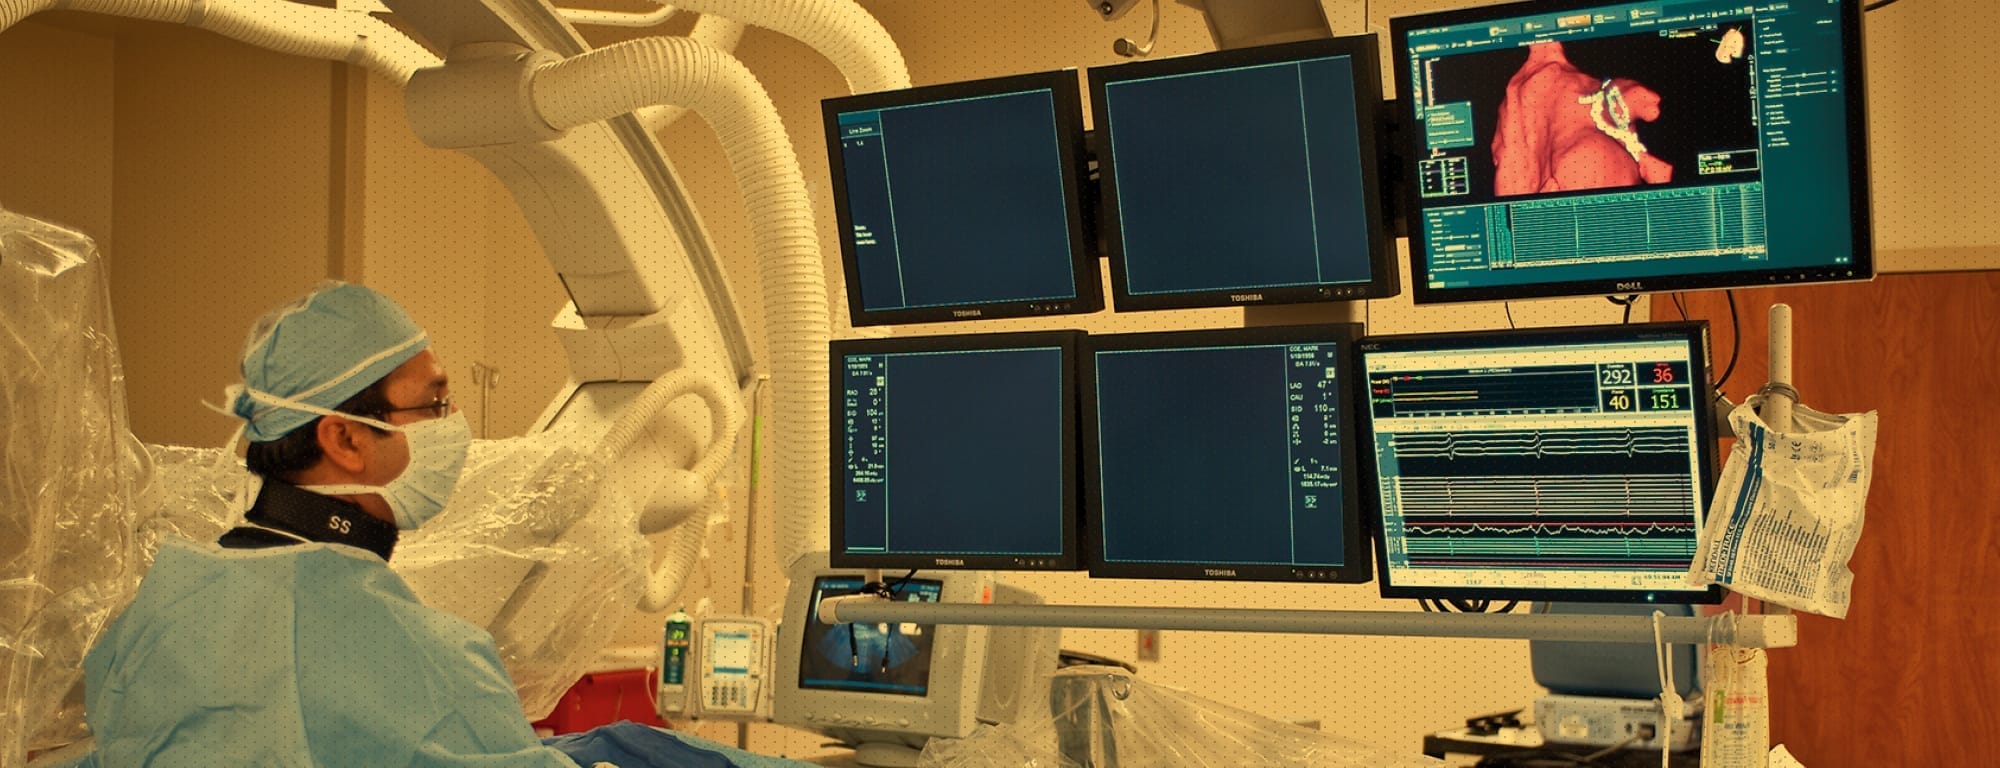 Surgeon in scrubs looking at screens during procedure